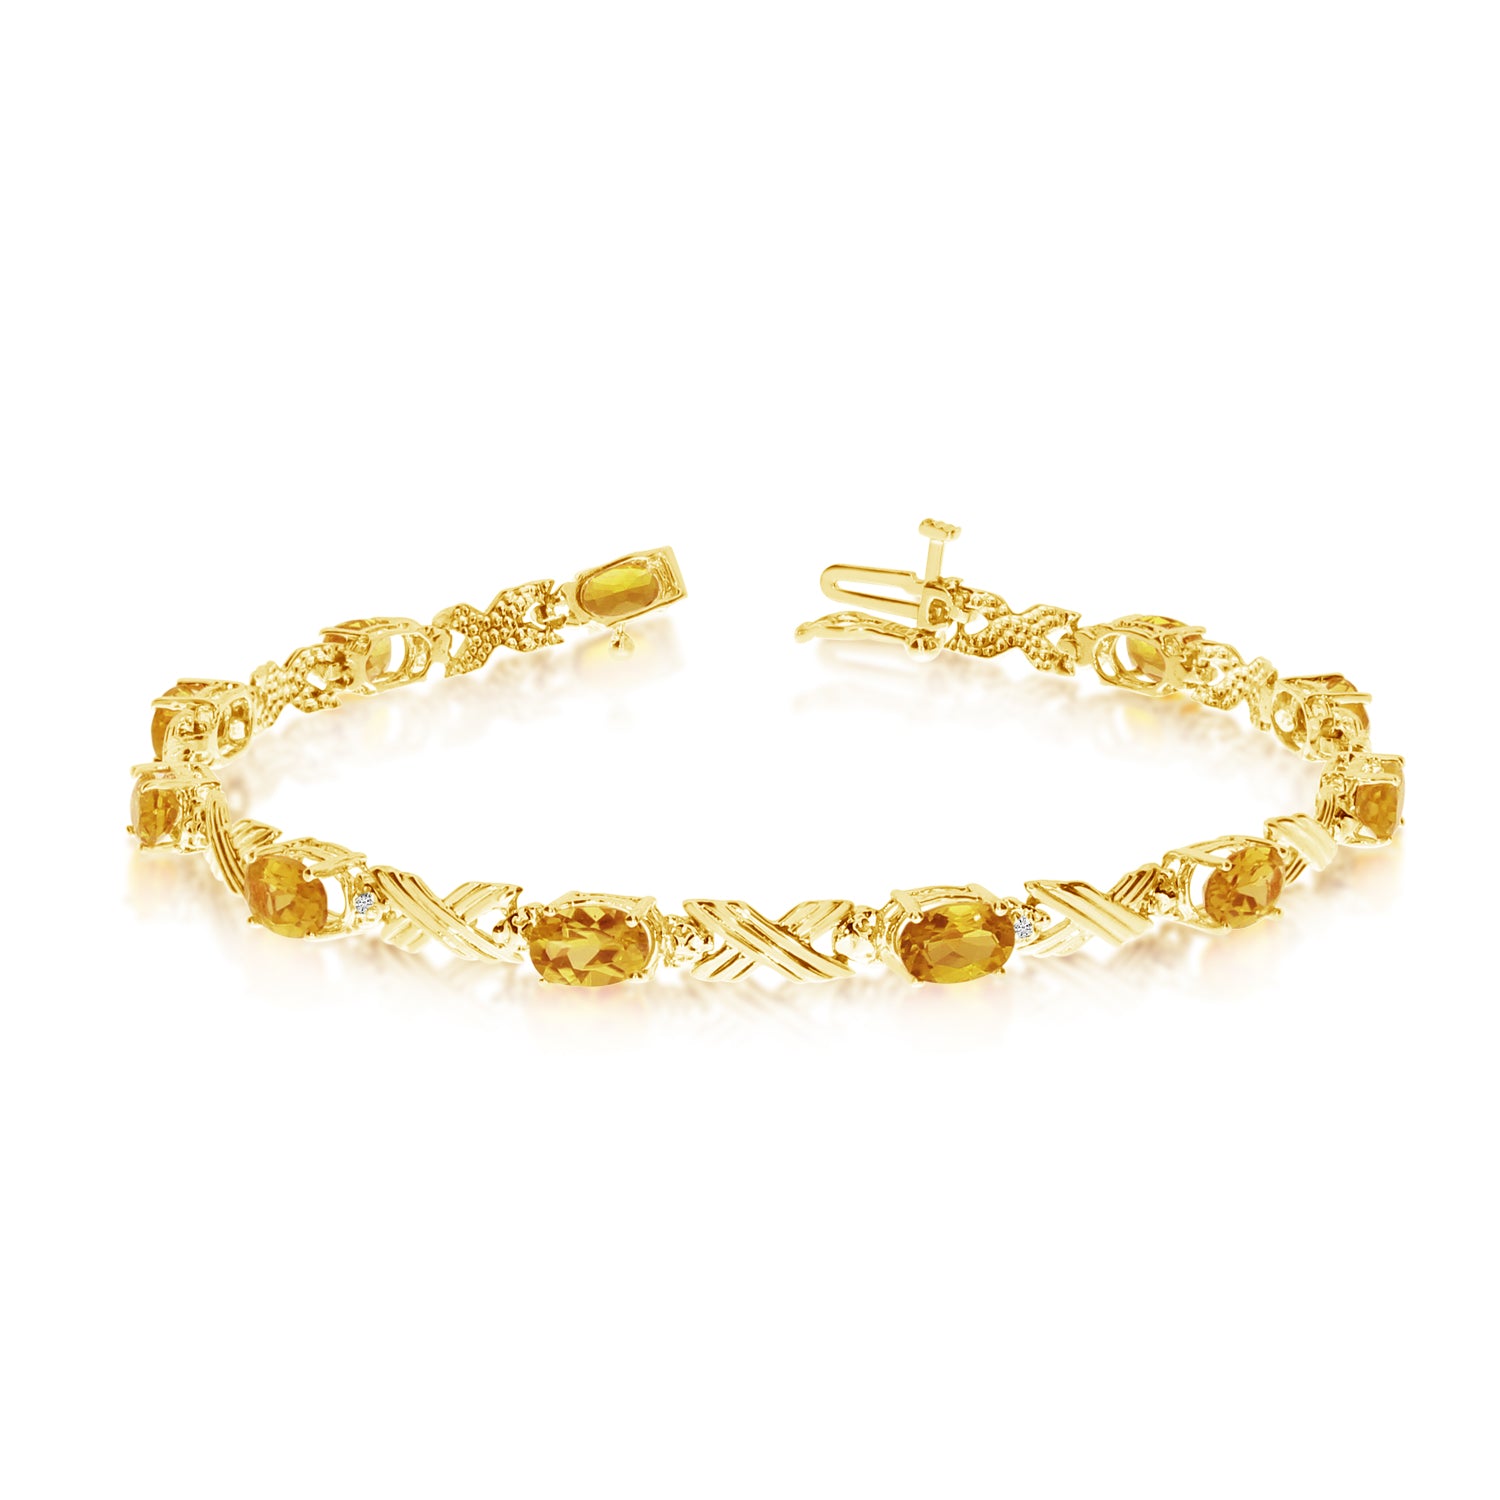 10K Yellow Gold Oval Citrine Stones And Diamonds Tennis Bracelet, 7" fine designer jewelry for men and women